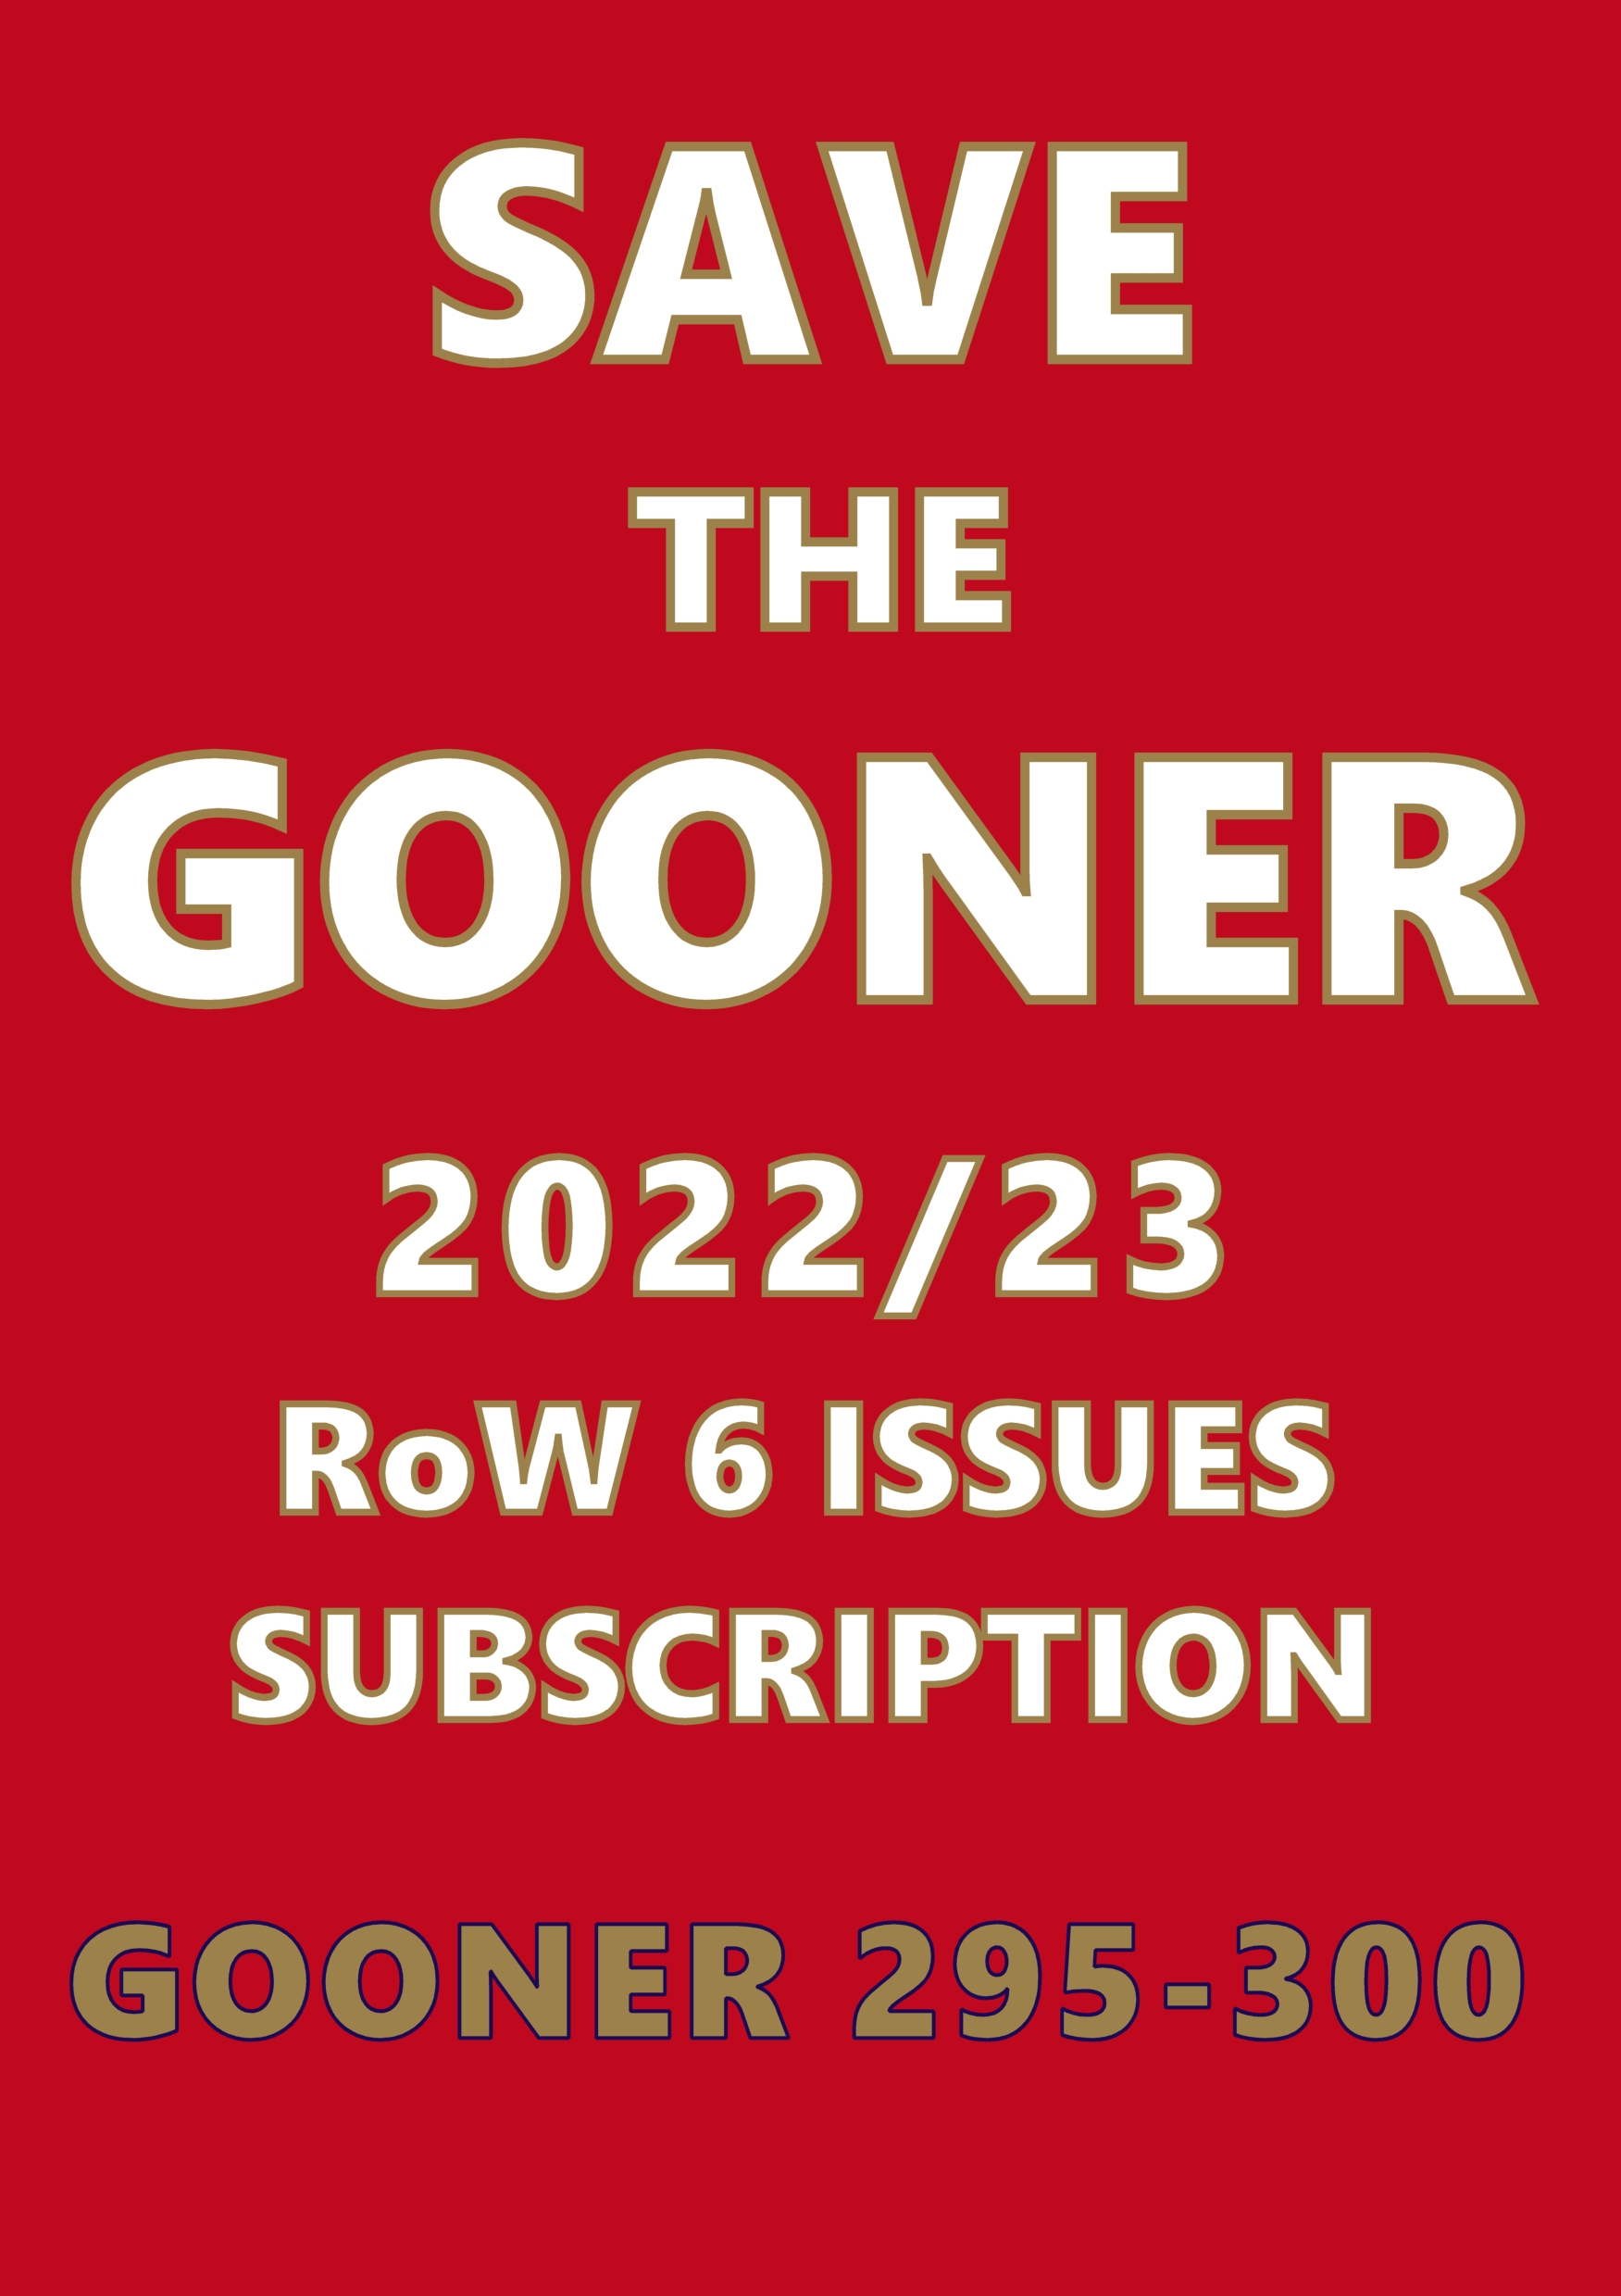 Save The Gooner 2022/23 subscription (Overseas 1 Year)